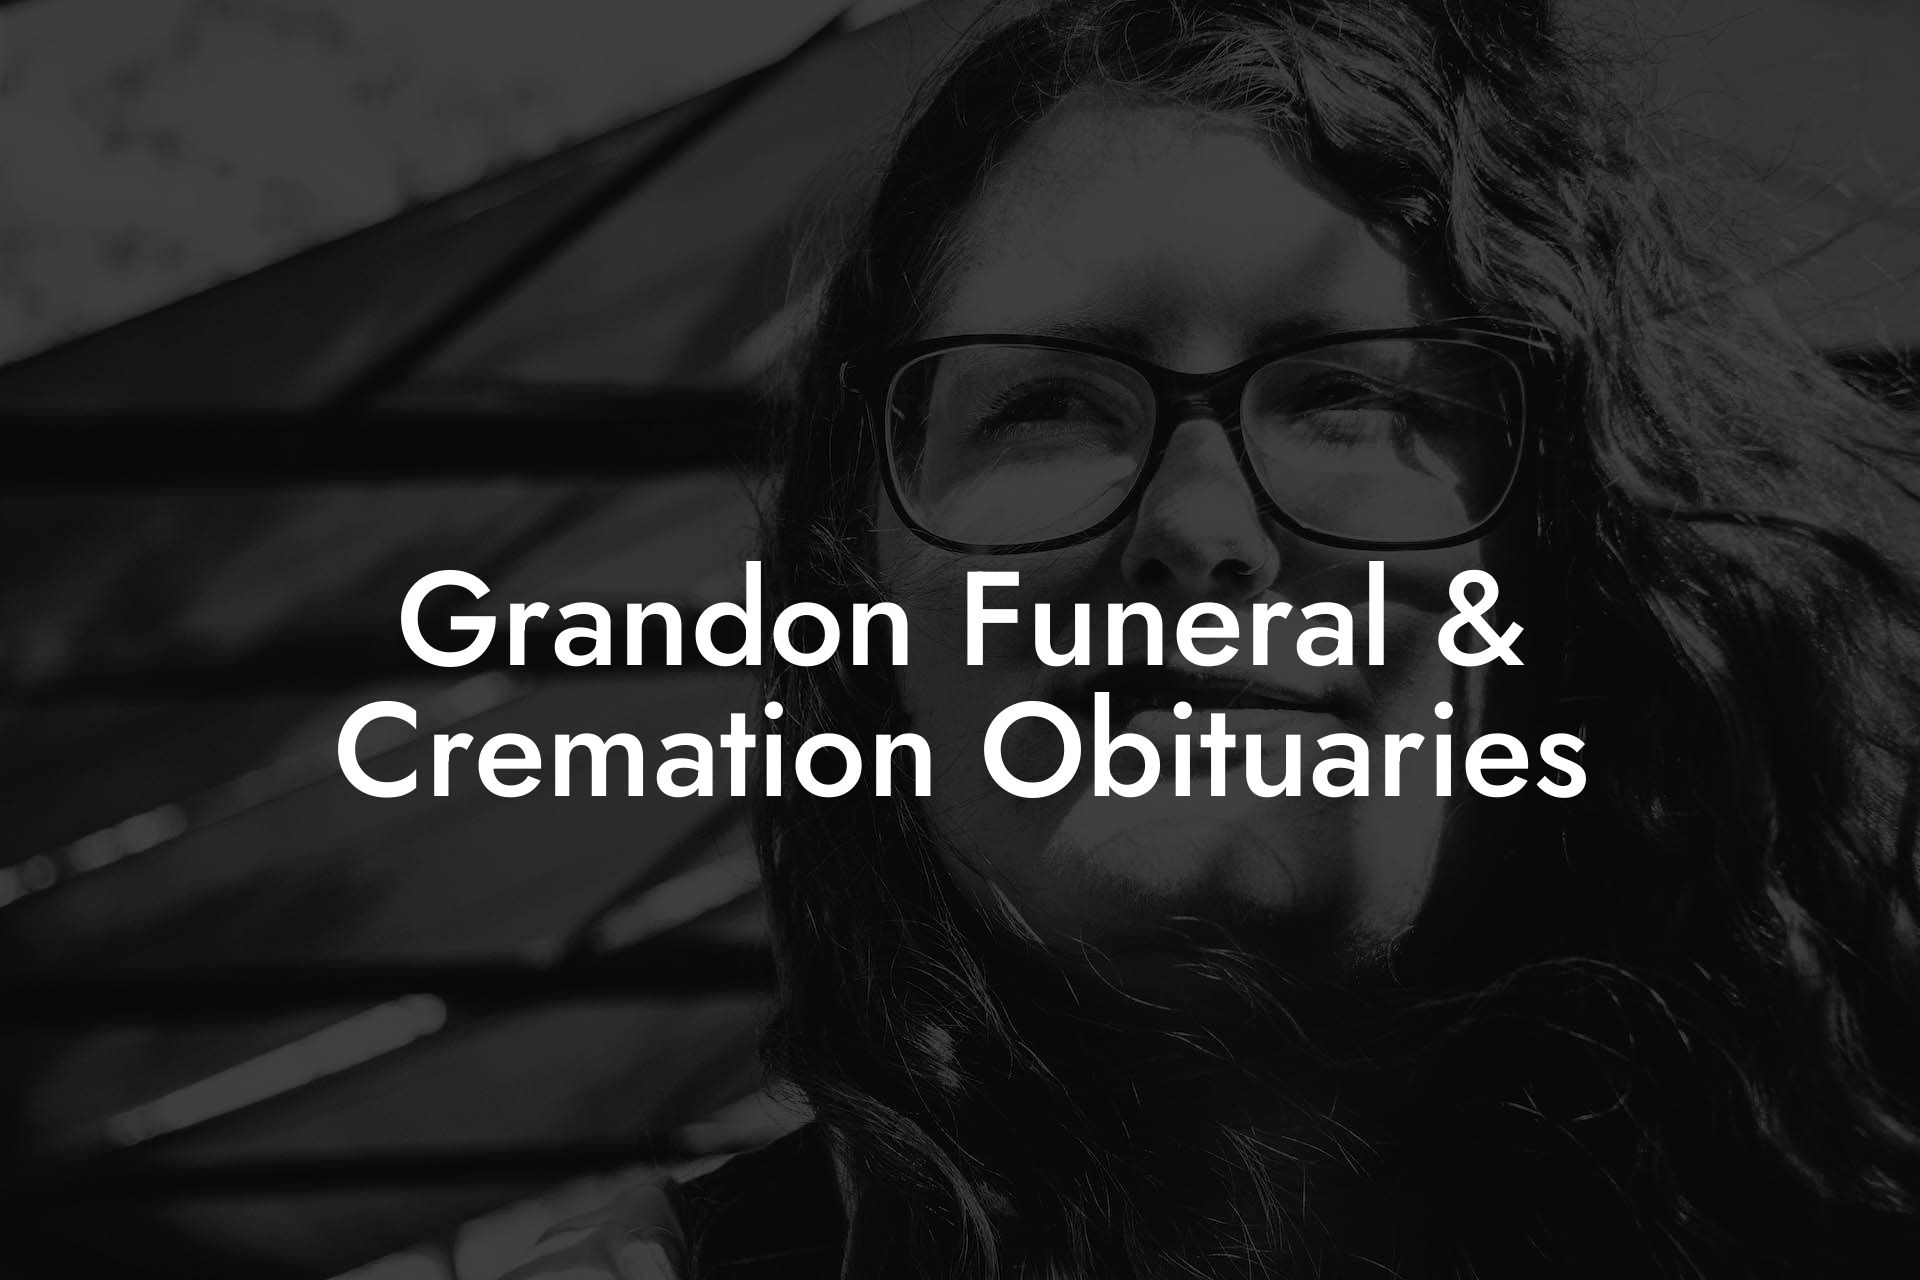 Grandon Funeral & Cremation Obituaries